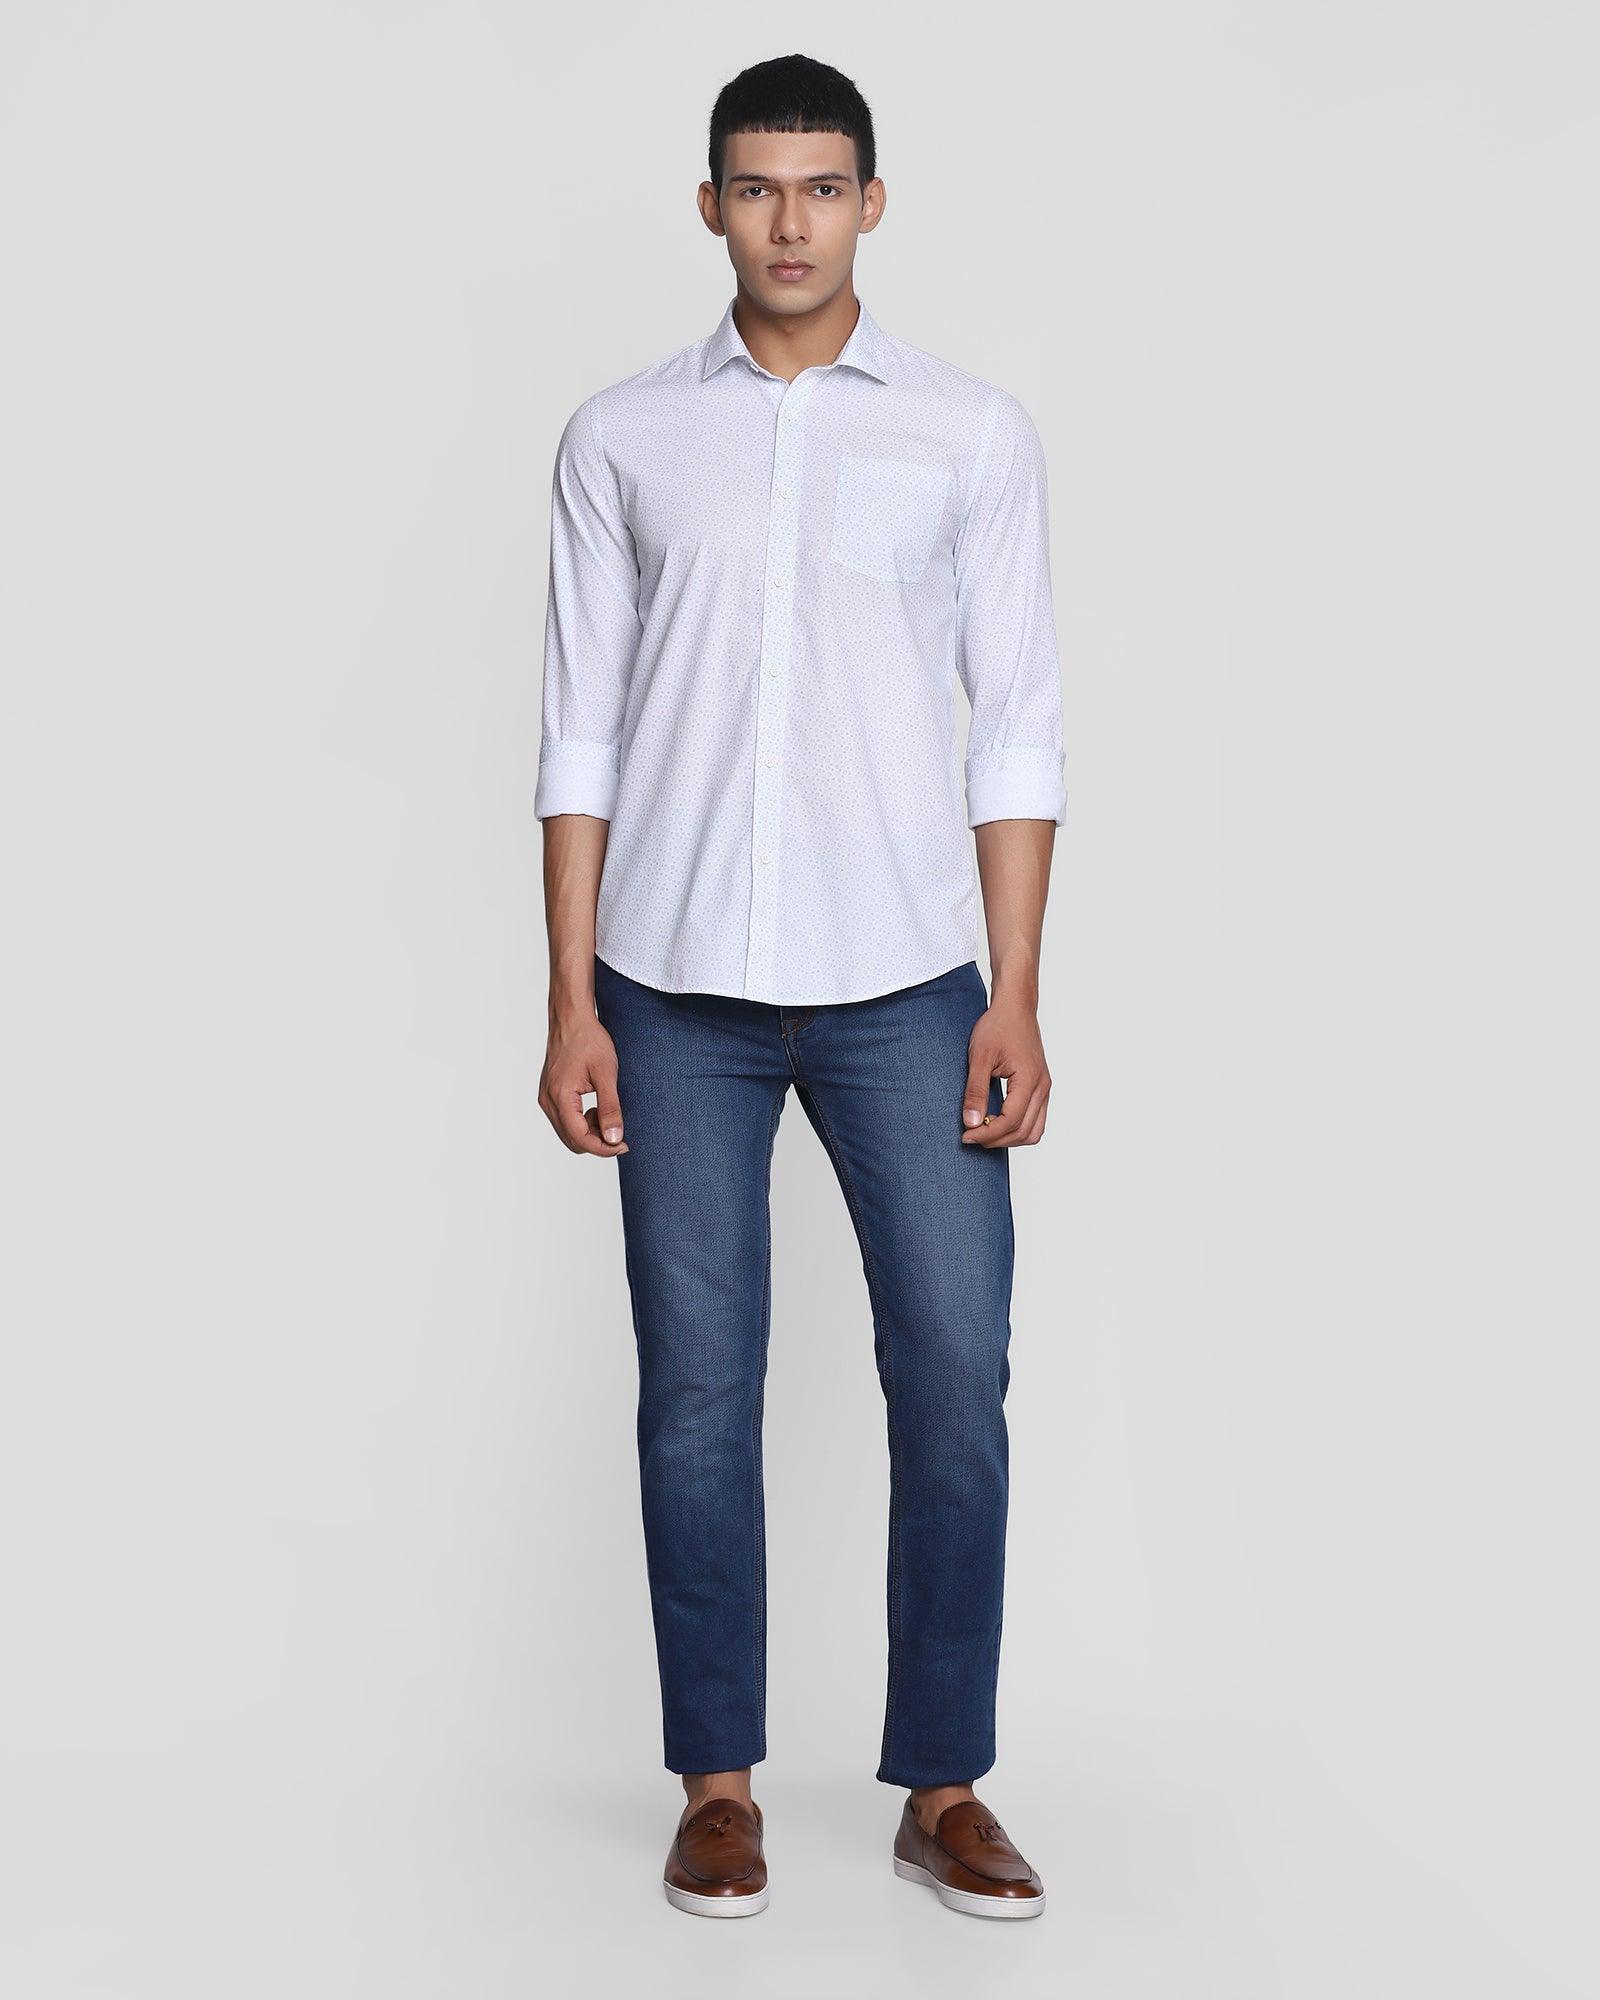 Buy Men White Printed T-Shirt Online in India - Monte Carlo